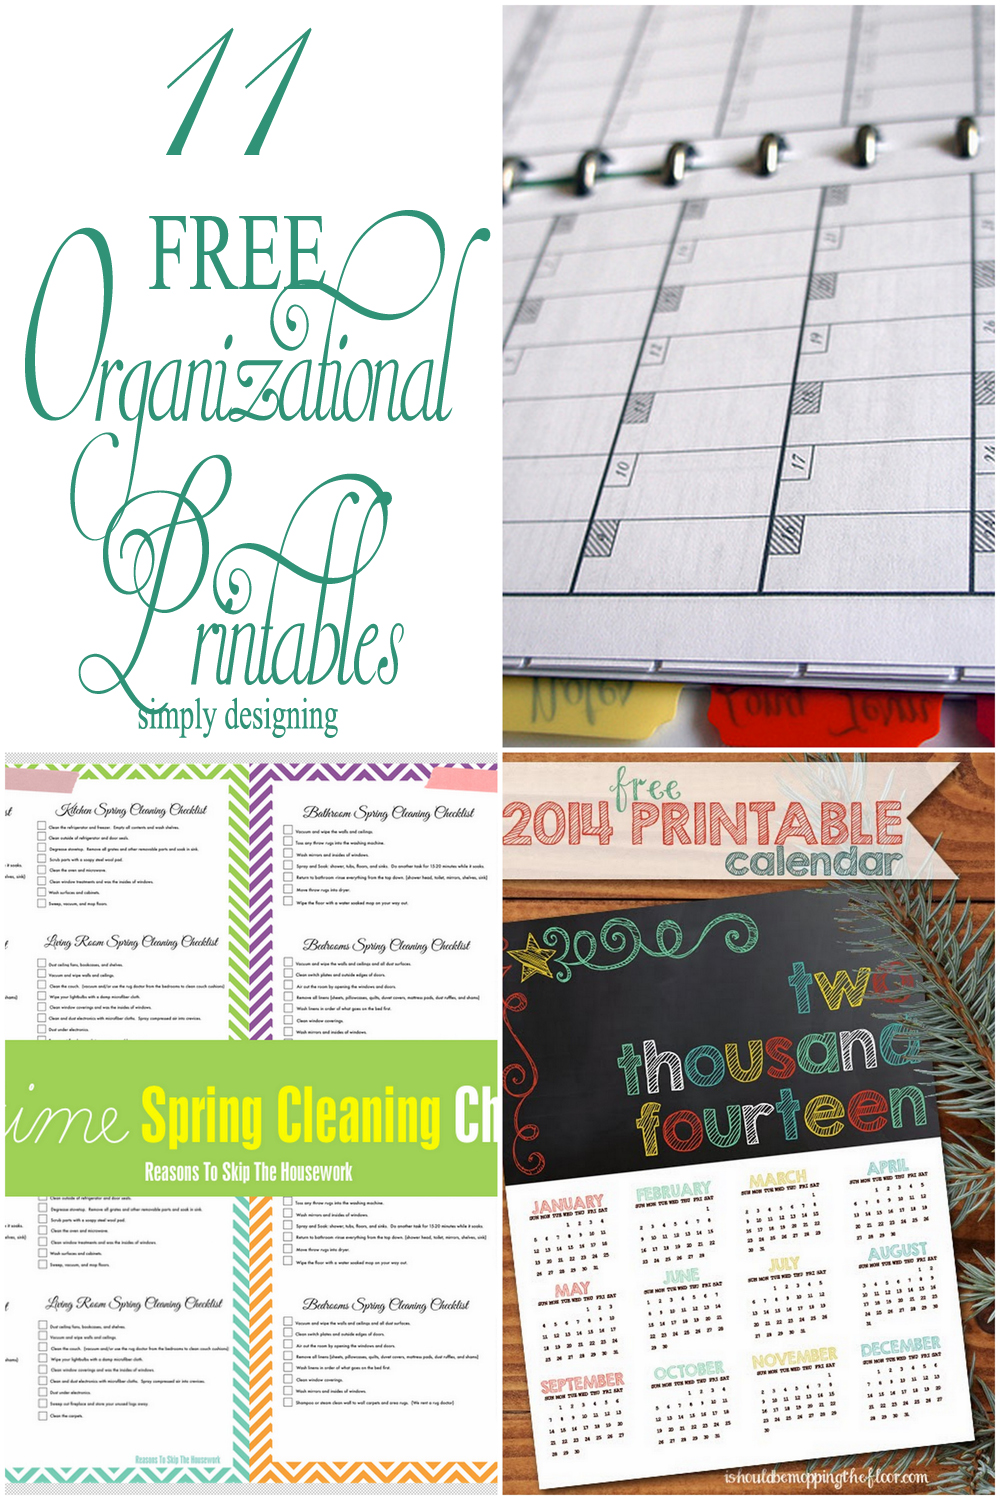 11-free-organizational-printables